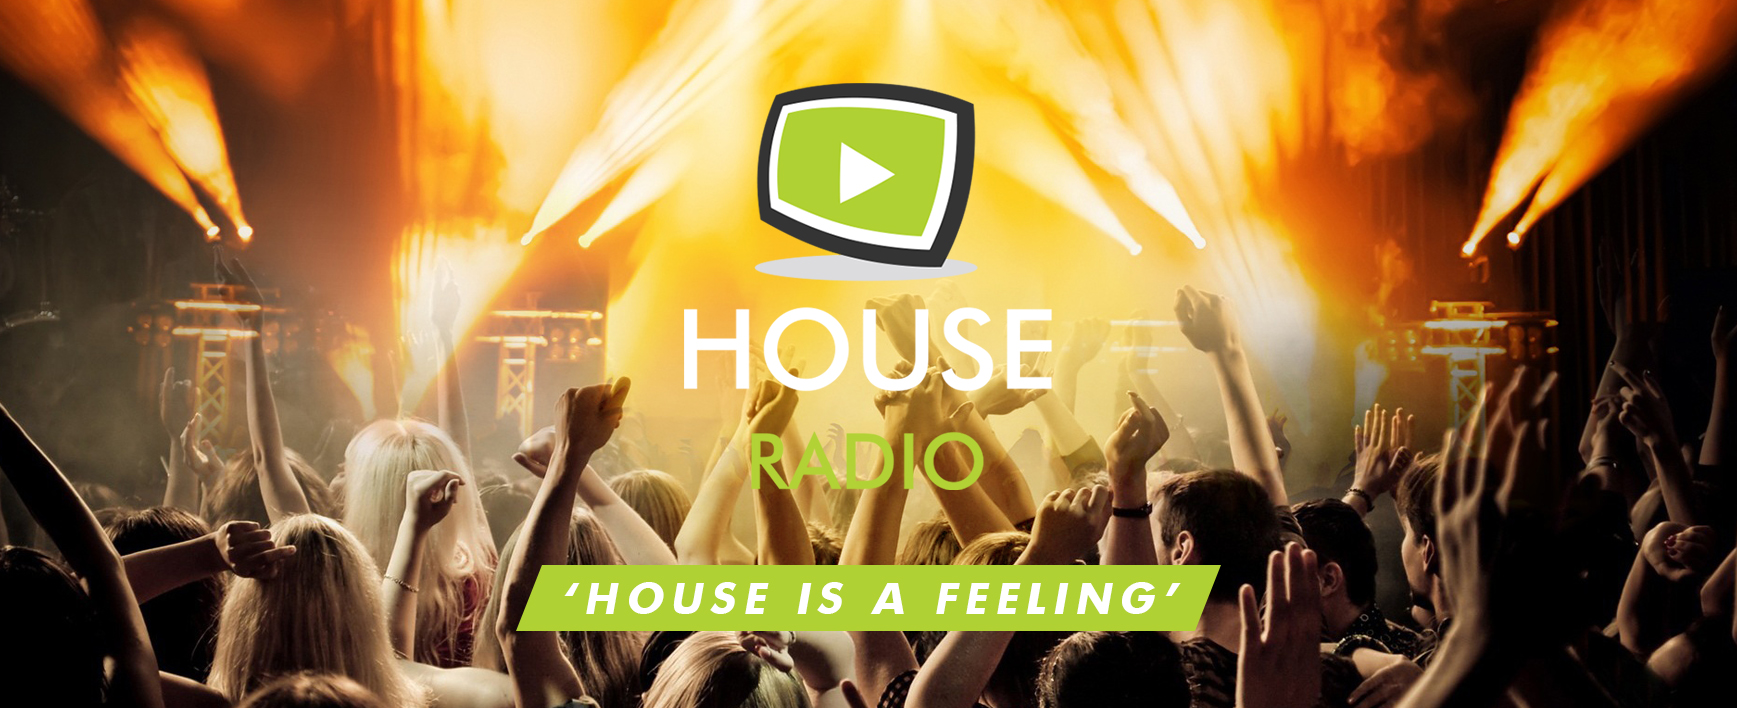 slide_houseradio